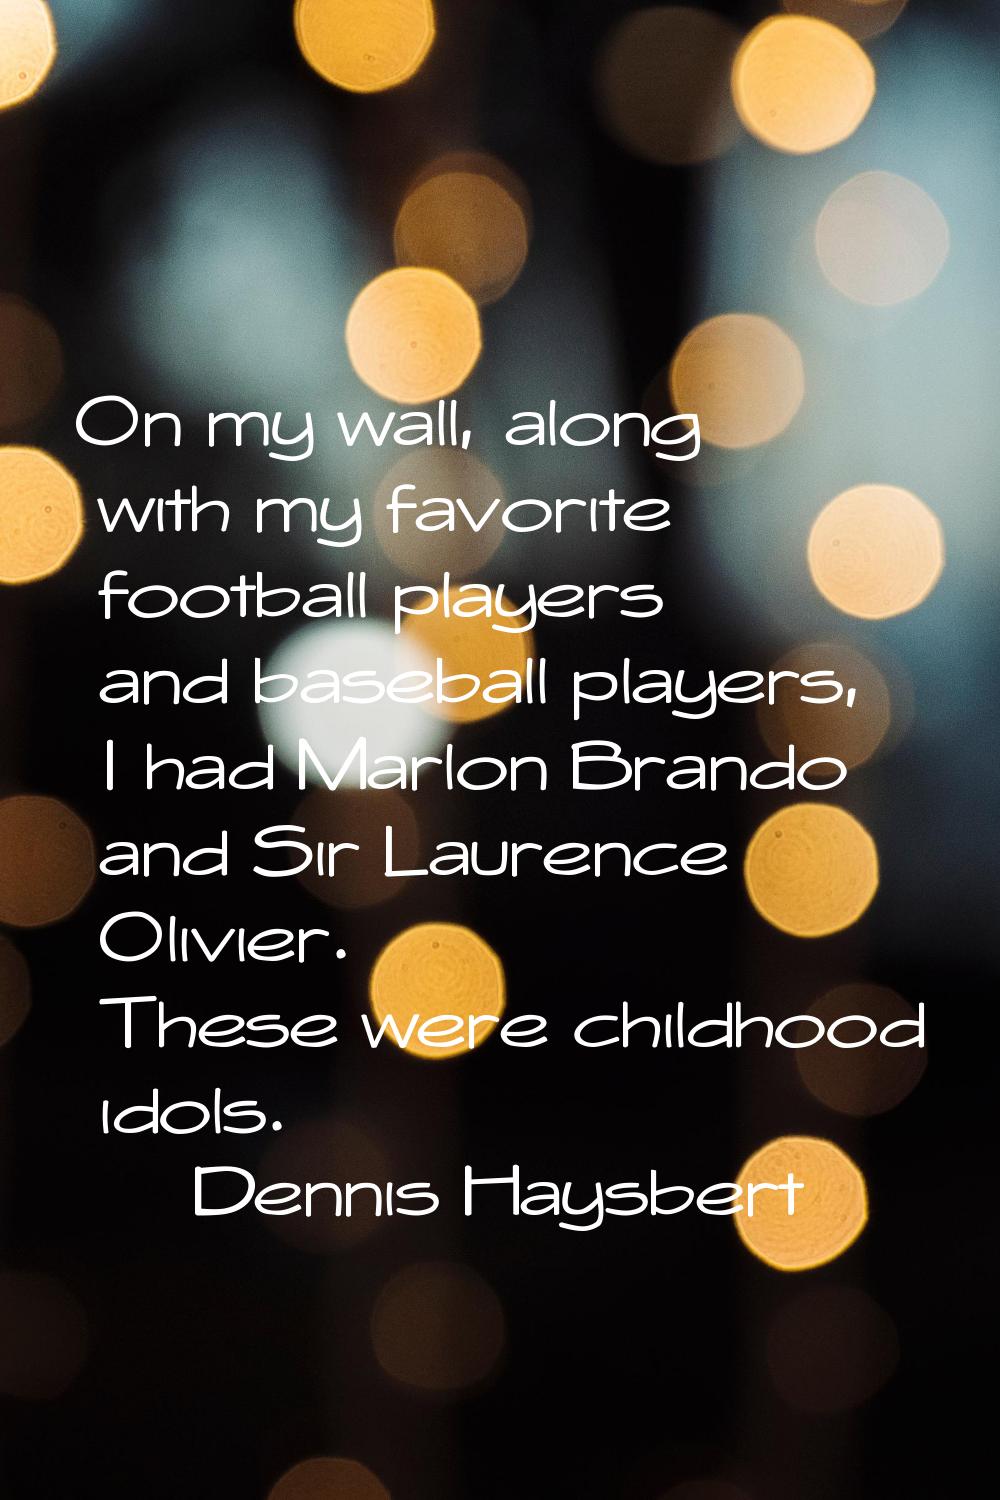 On my wall, along with my favorite football players and baseball players, I had Marlon Brando and S